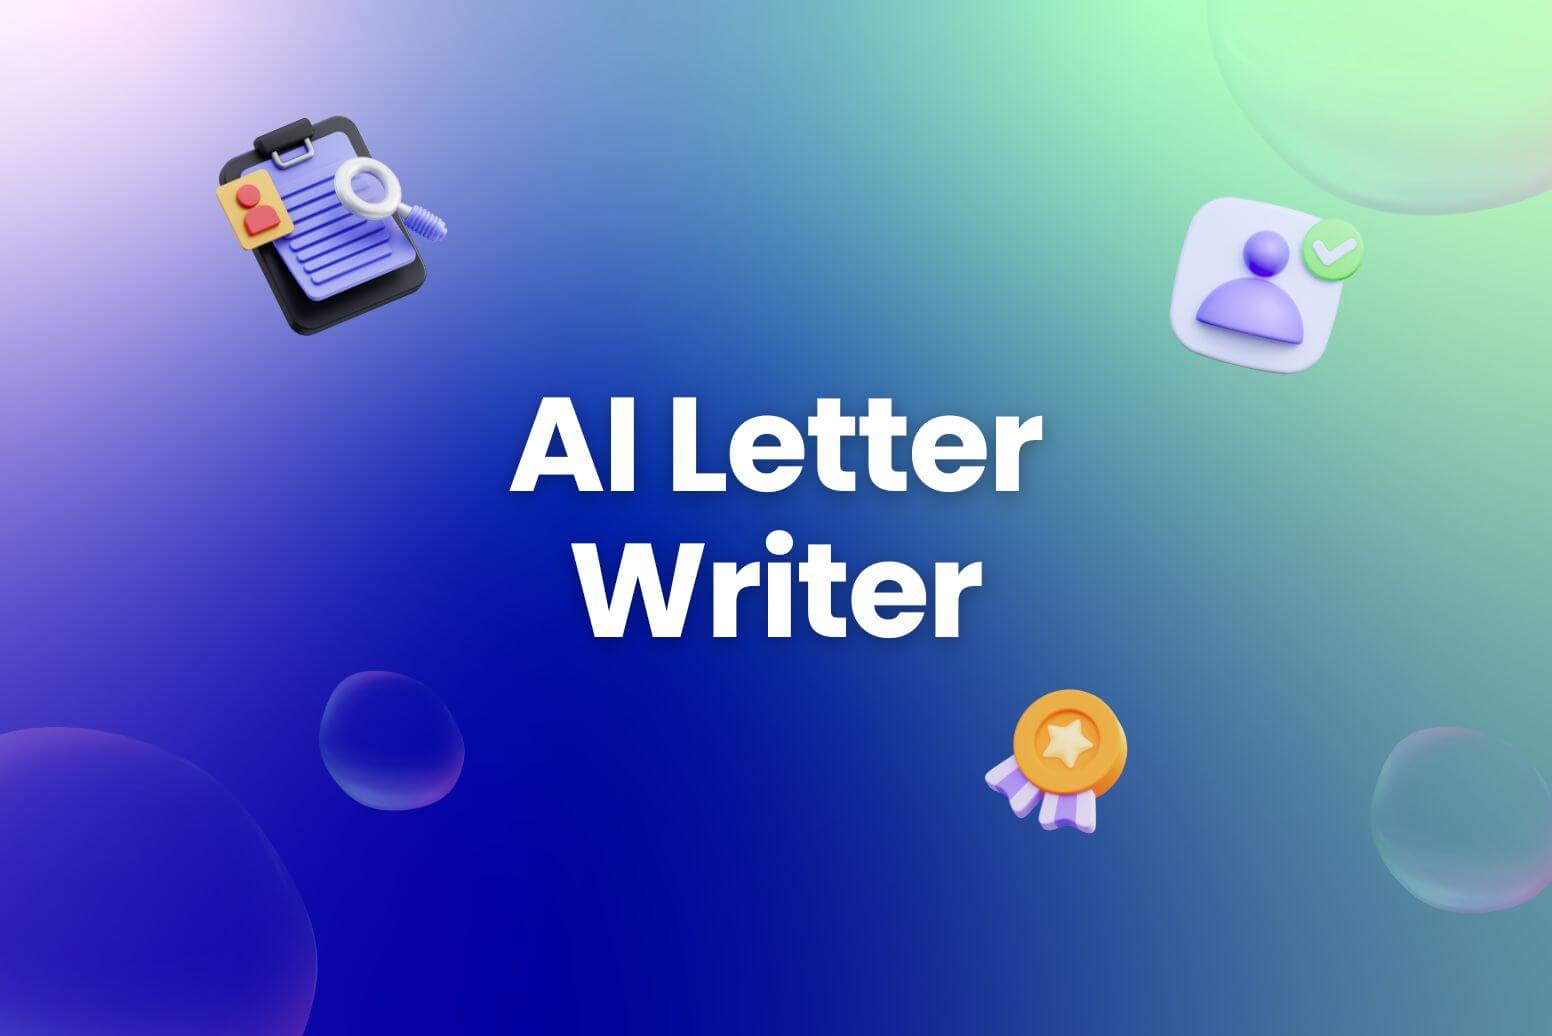 AI Letter Writer